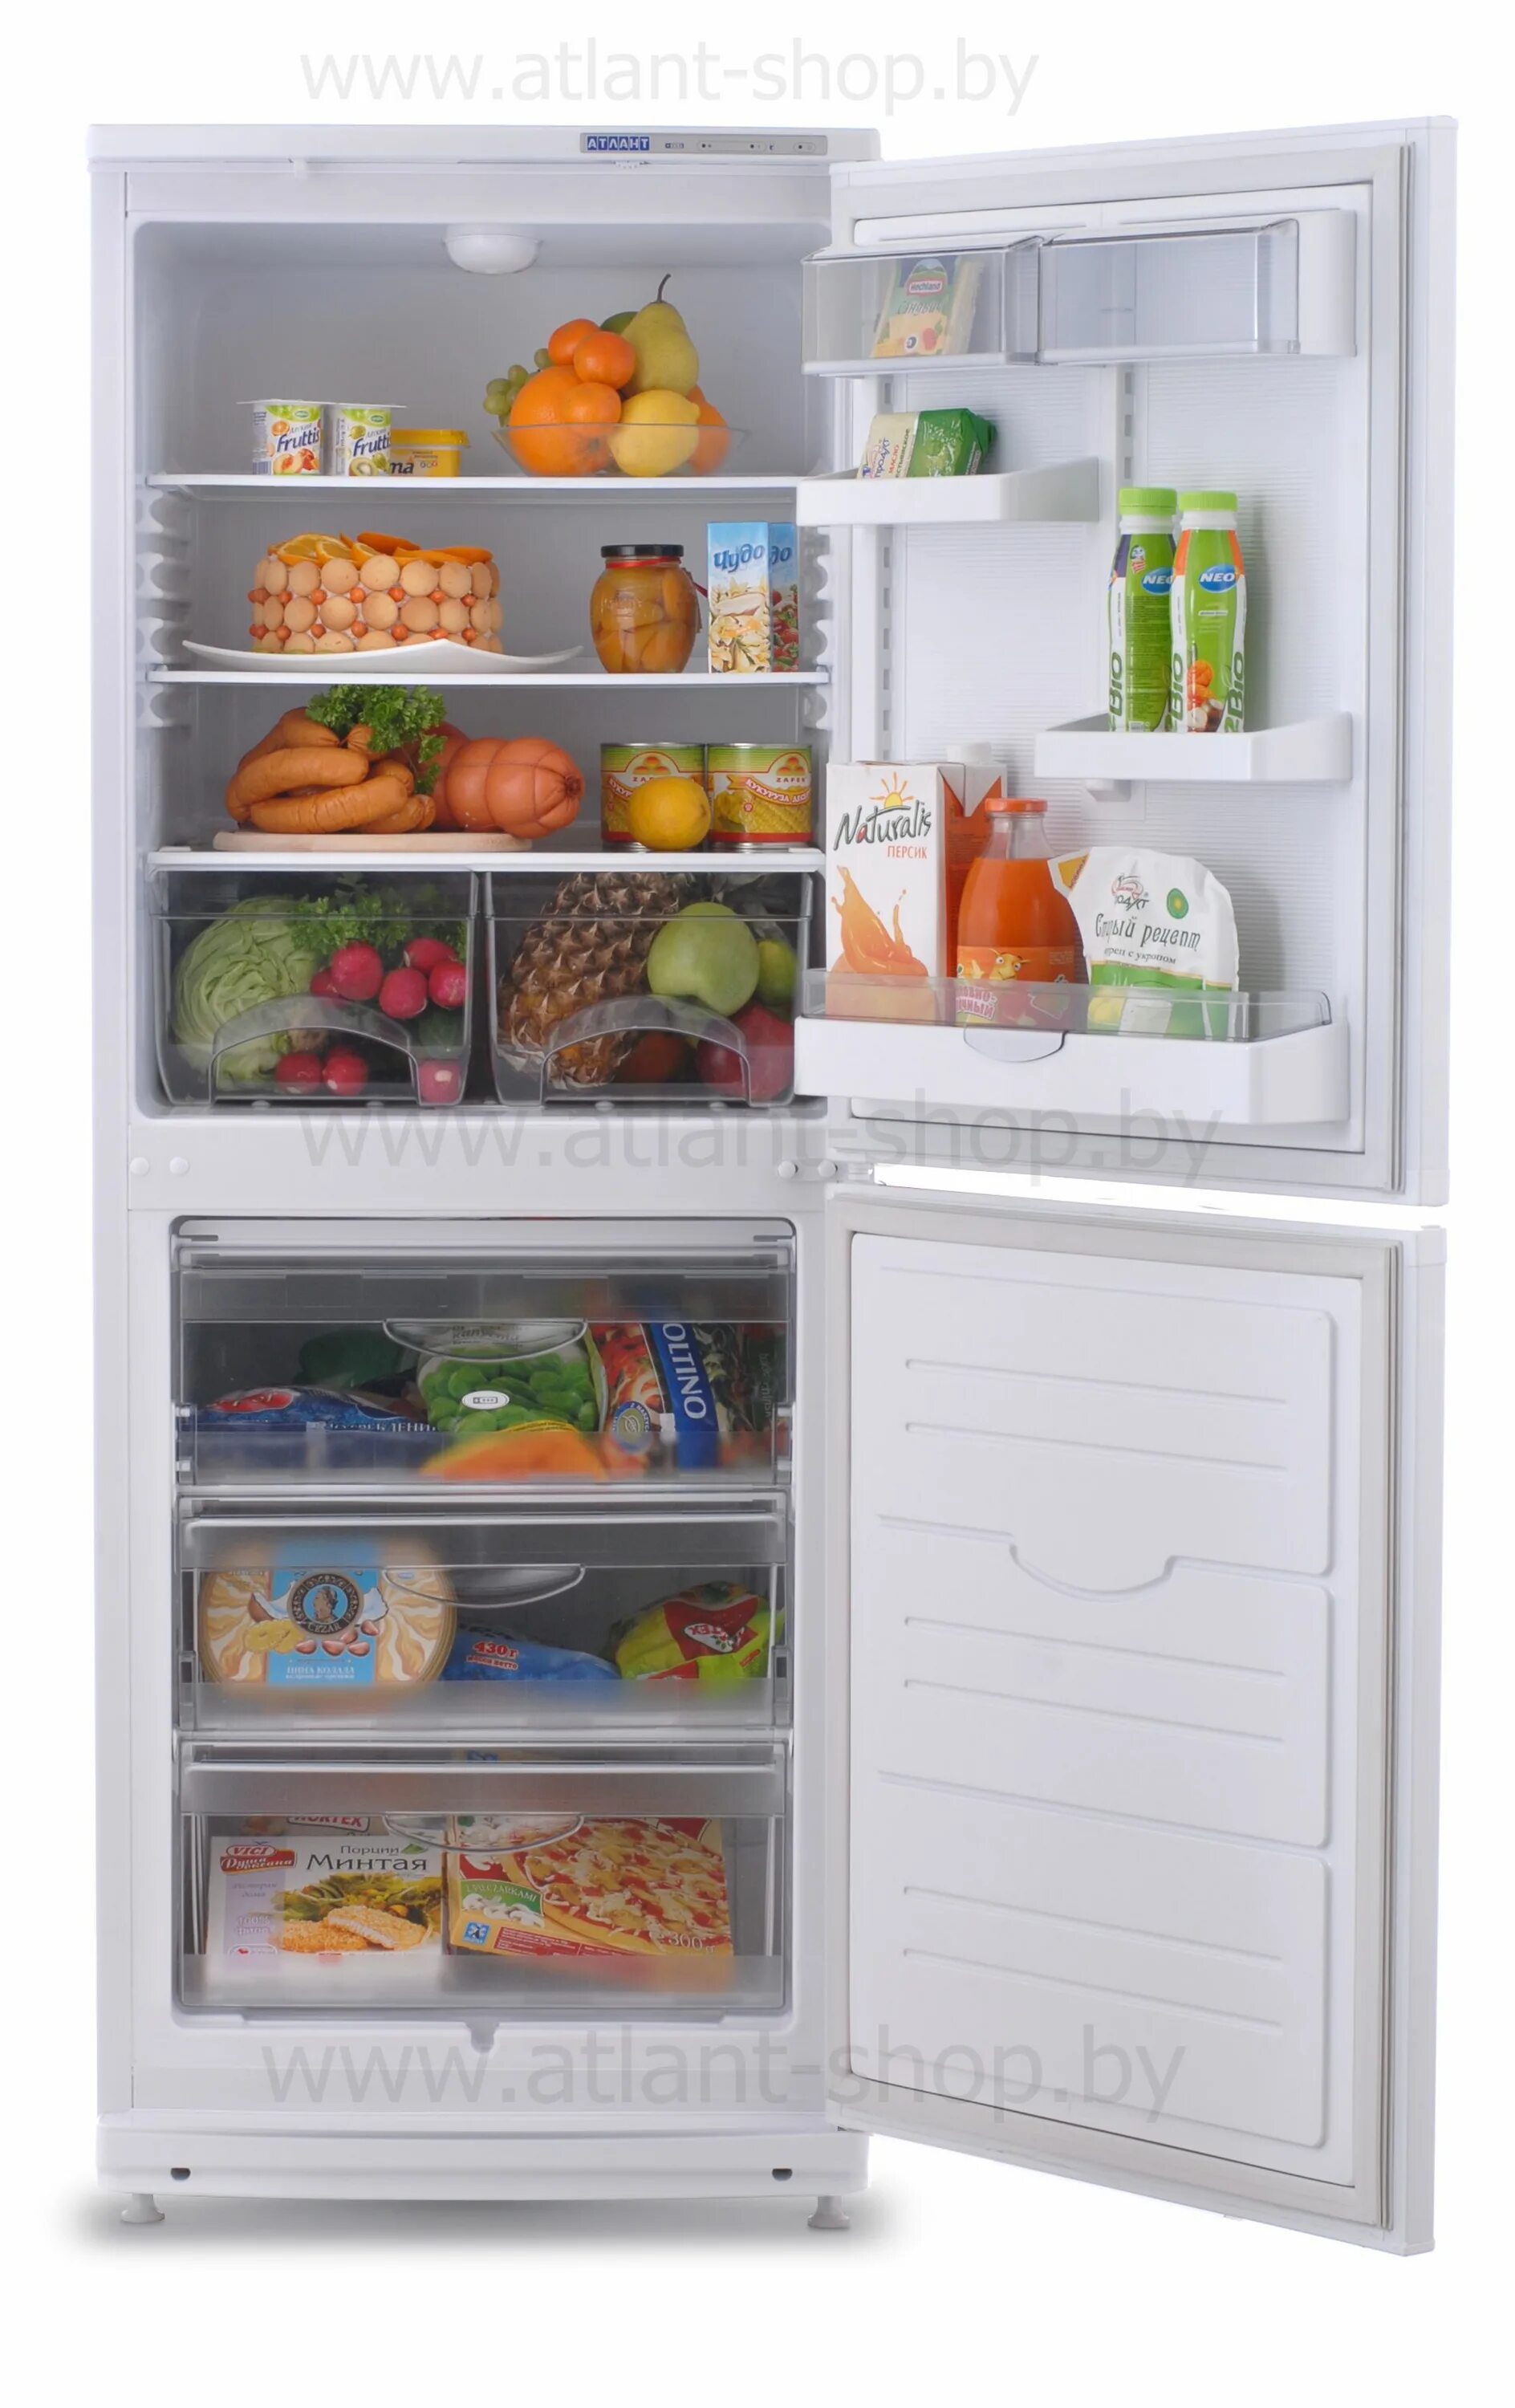 Холодильник ATLANT хм 4010-022. ATLANT холодильник XM 4010. Атлант XM-4010-022. Холодильник двухкамерный Атлант 4010-022. Холодильник атлант купить в гомеле